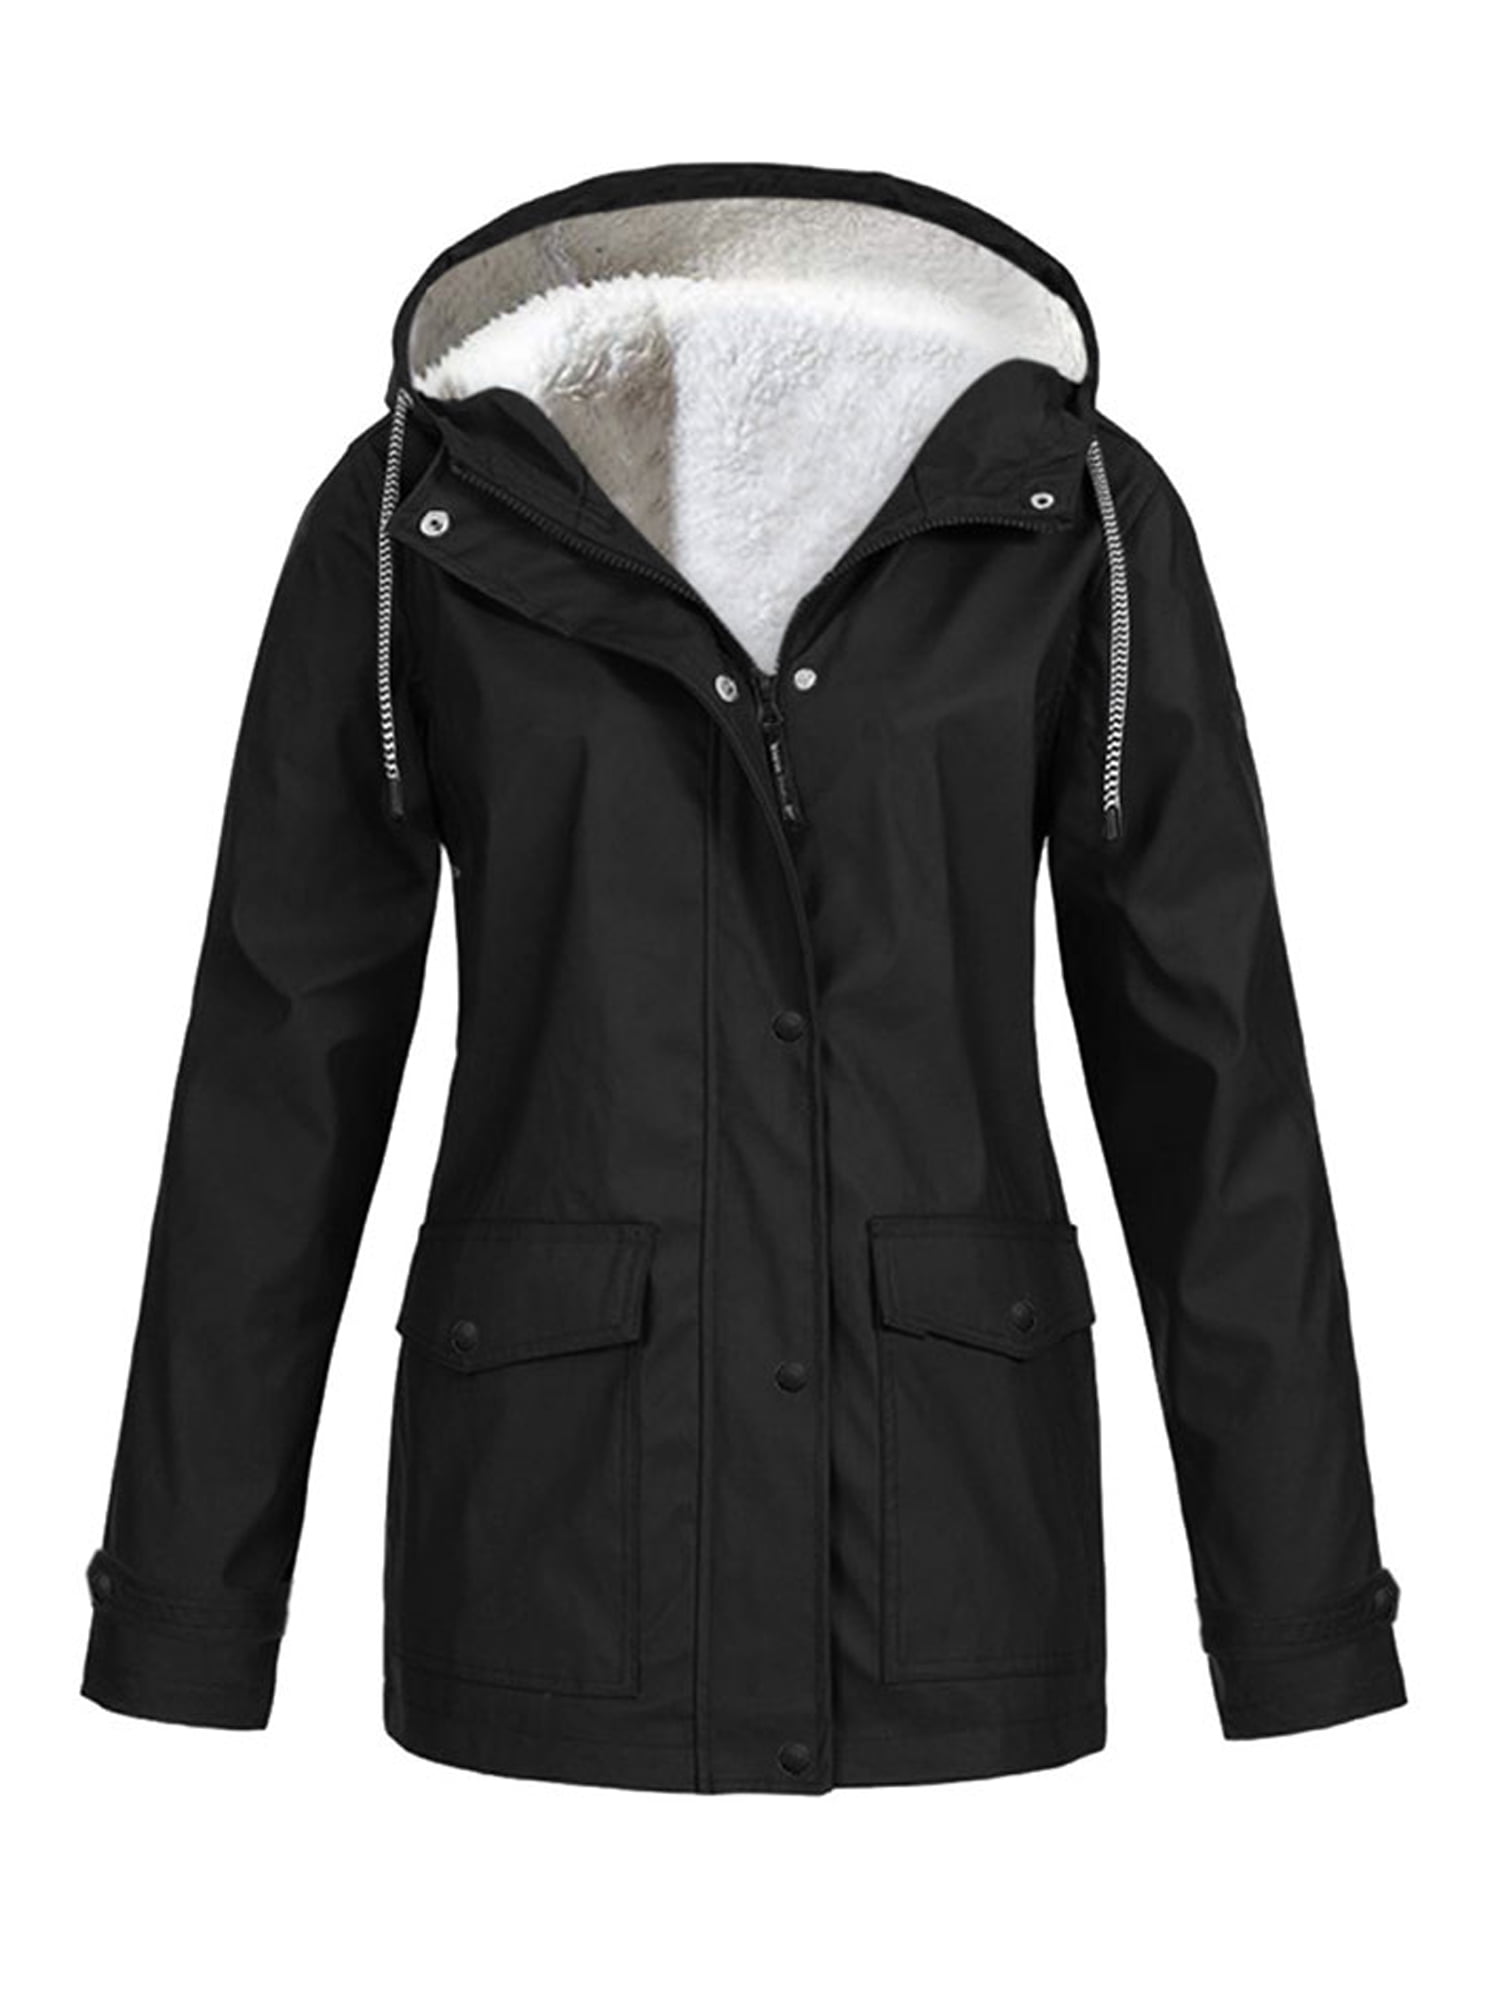 Women S Waterproof Jacket Raincoat Fleece Lined Warm Winter Coat Plus